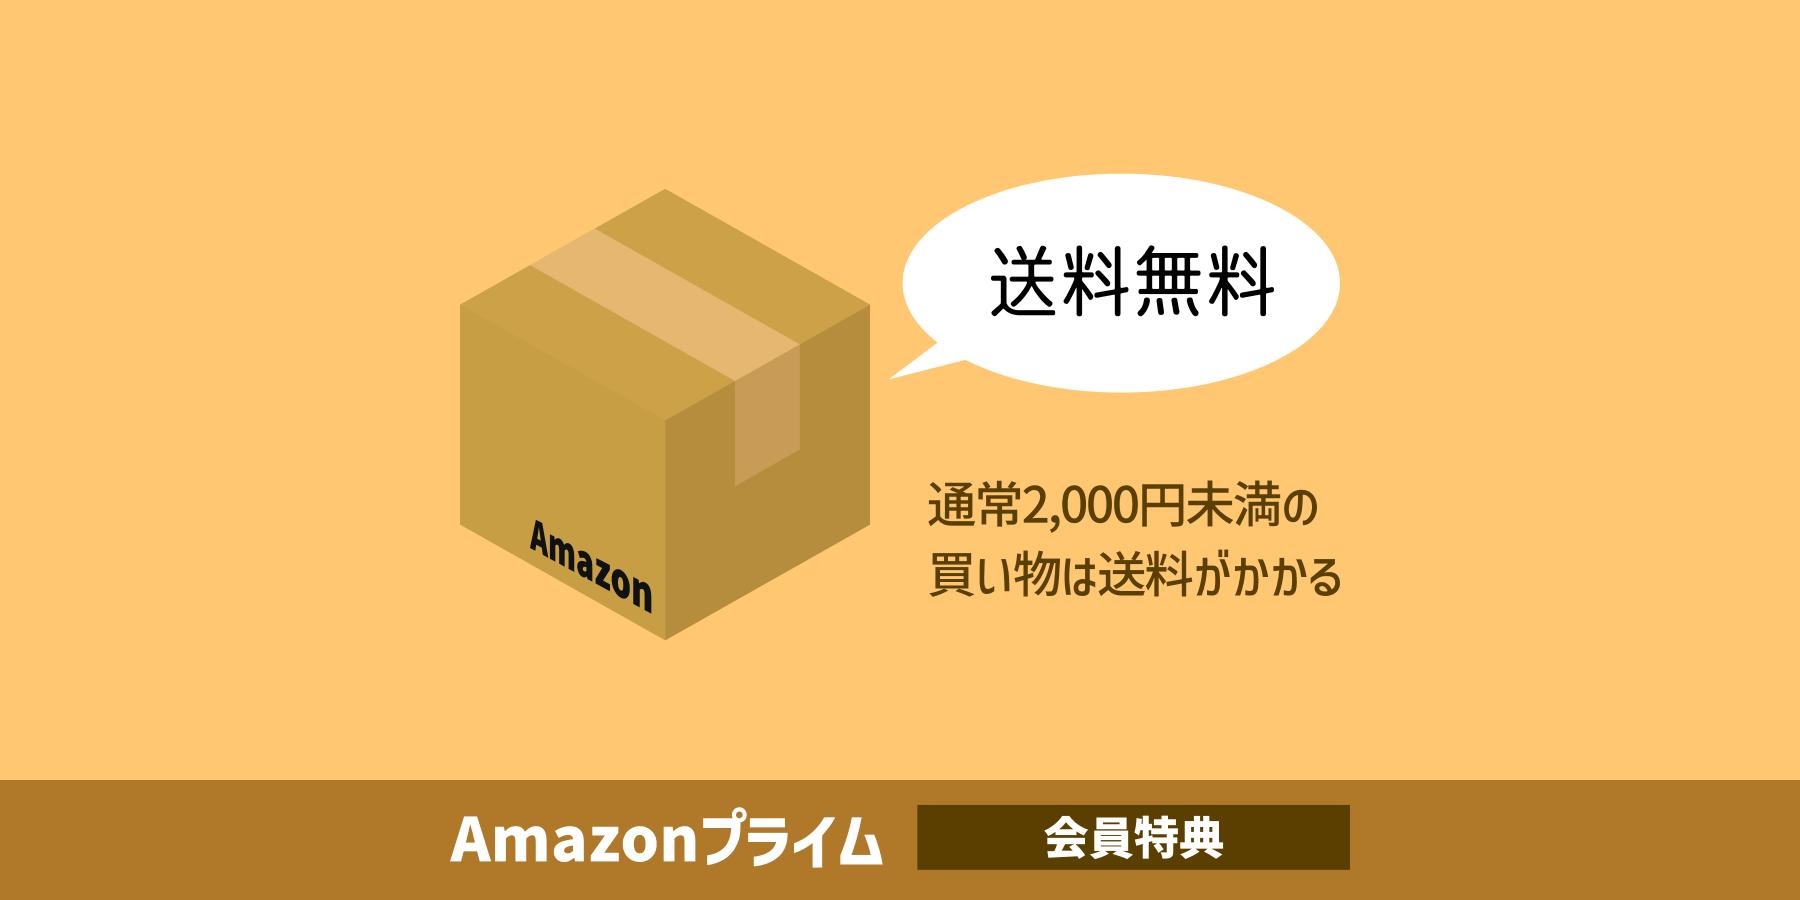 Amazon の送料が無料